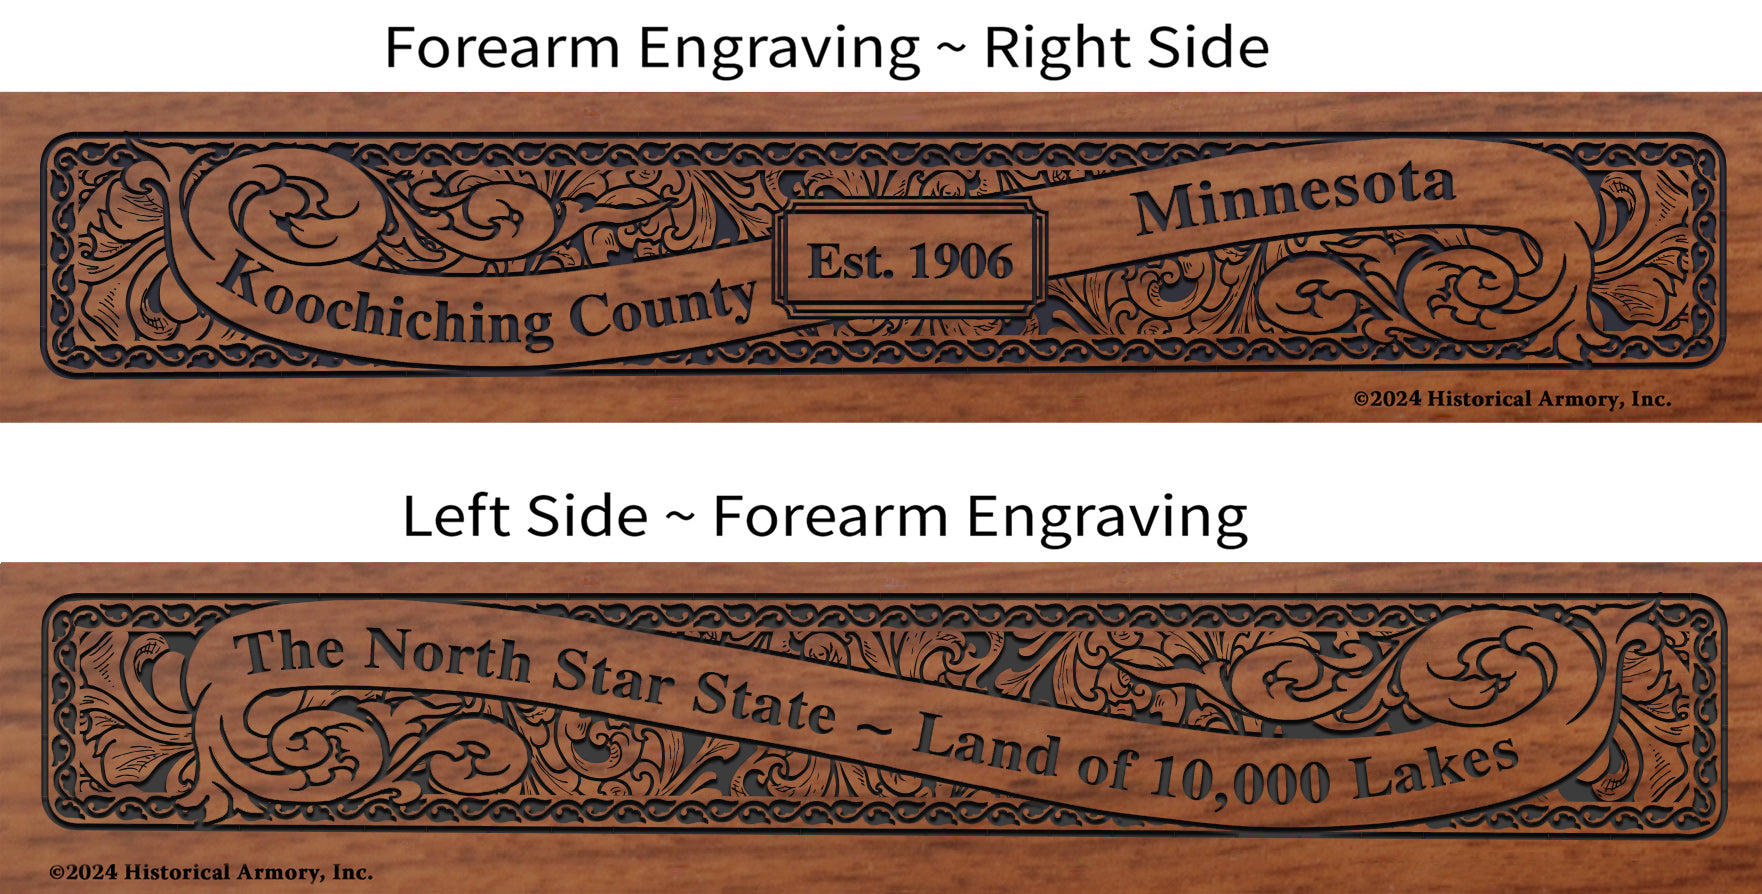 Koochiching County Minnesota Engraved Rifle Forearm